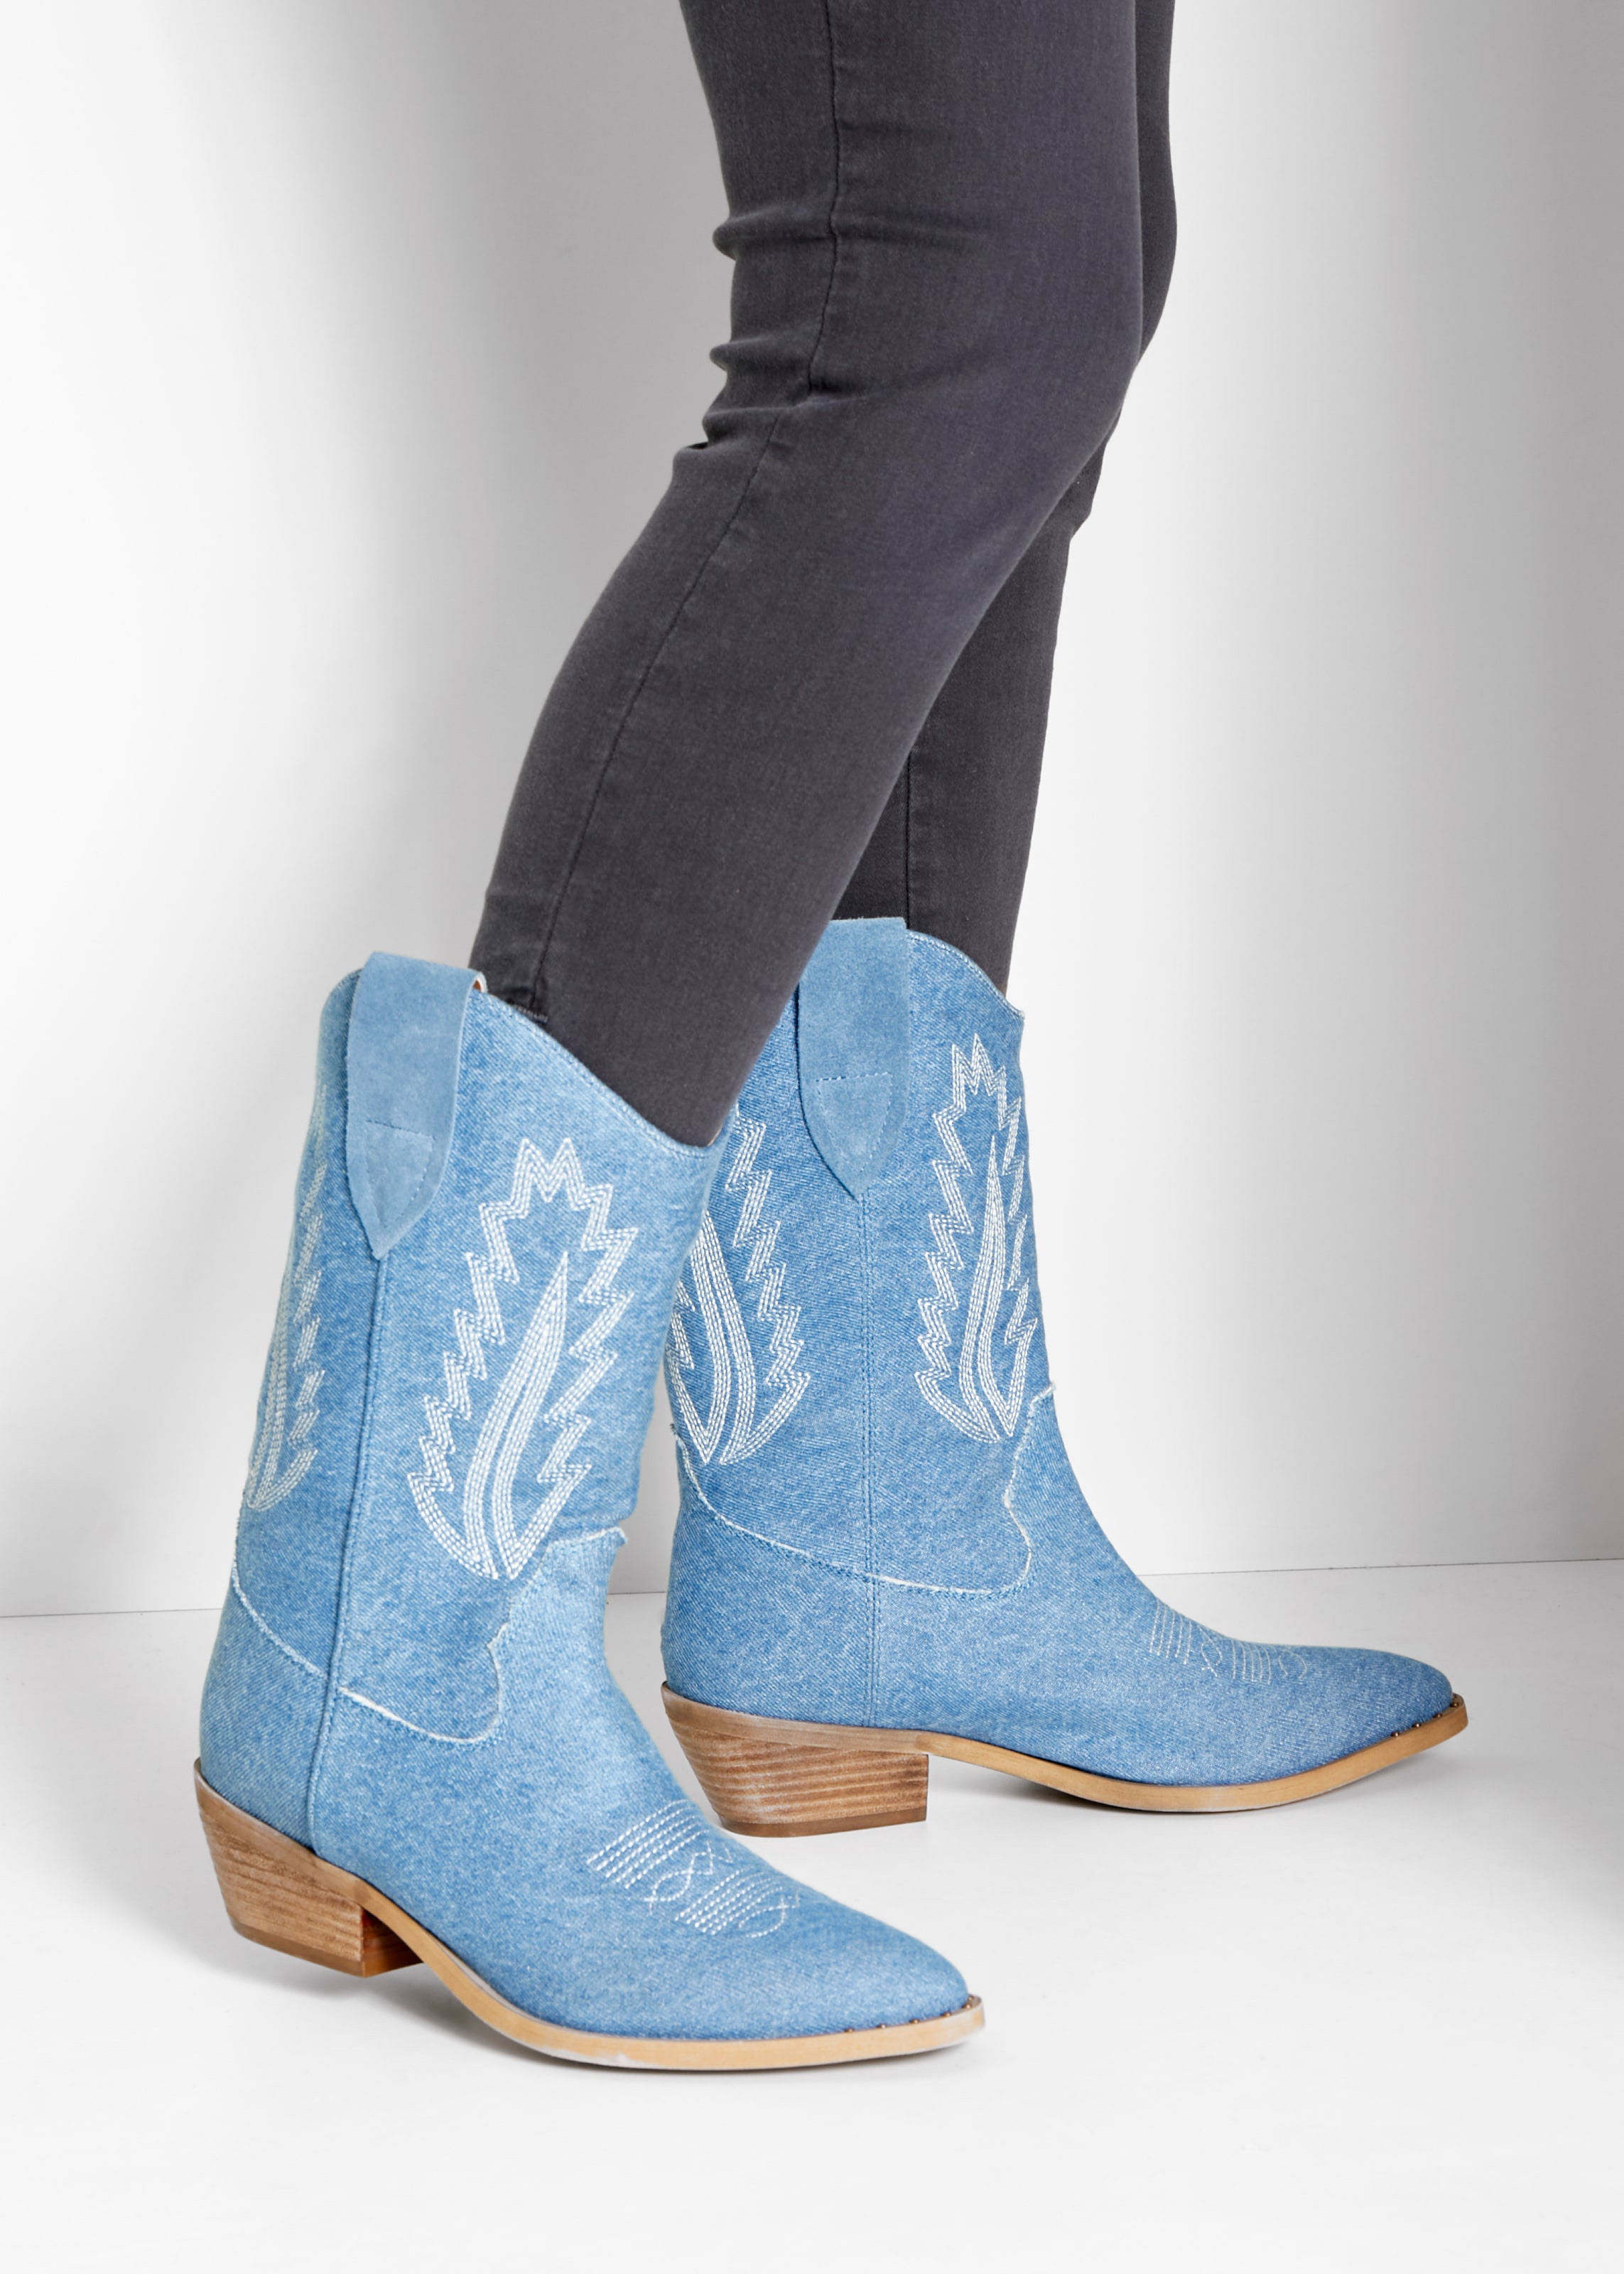 LASCANA Cowboy Boots, Cowboy Stiefelette, Western Stiefelette, Ankleboots im Denim-Look